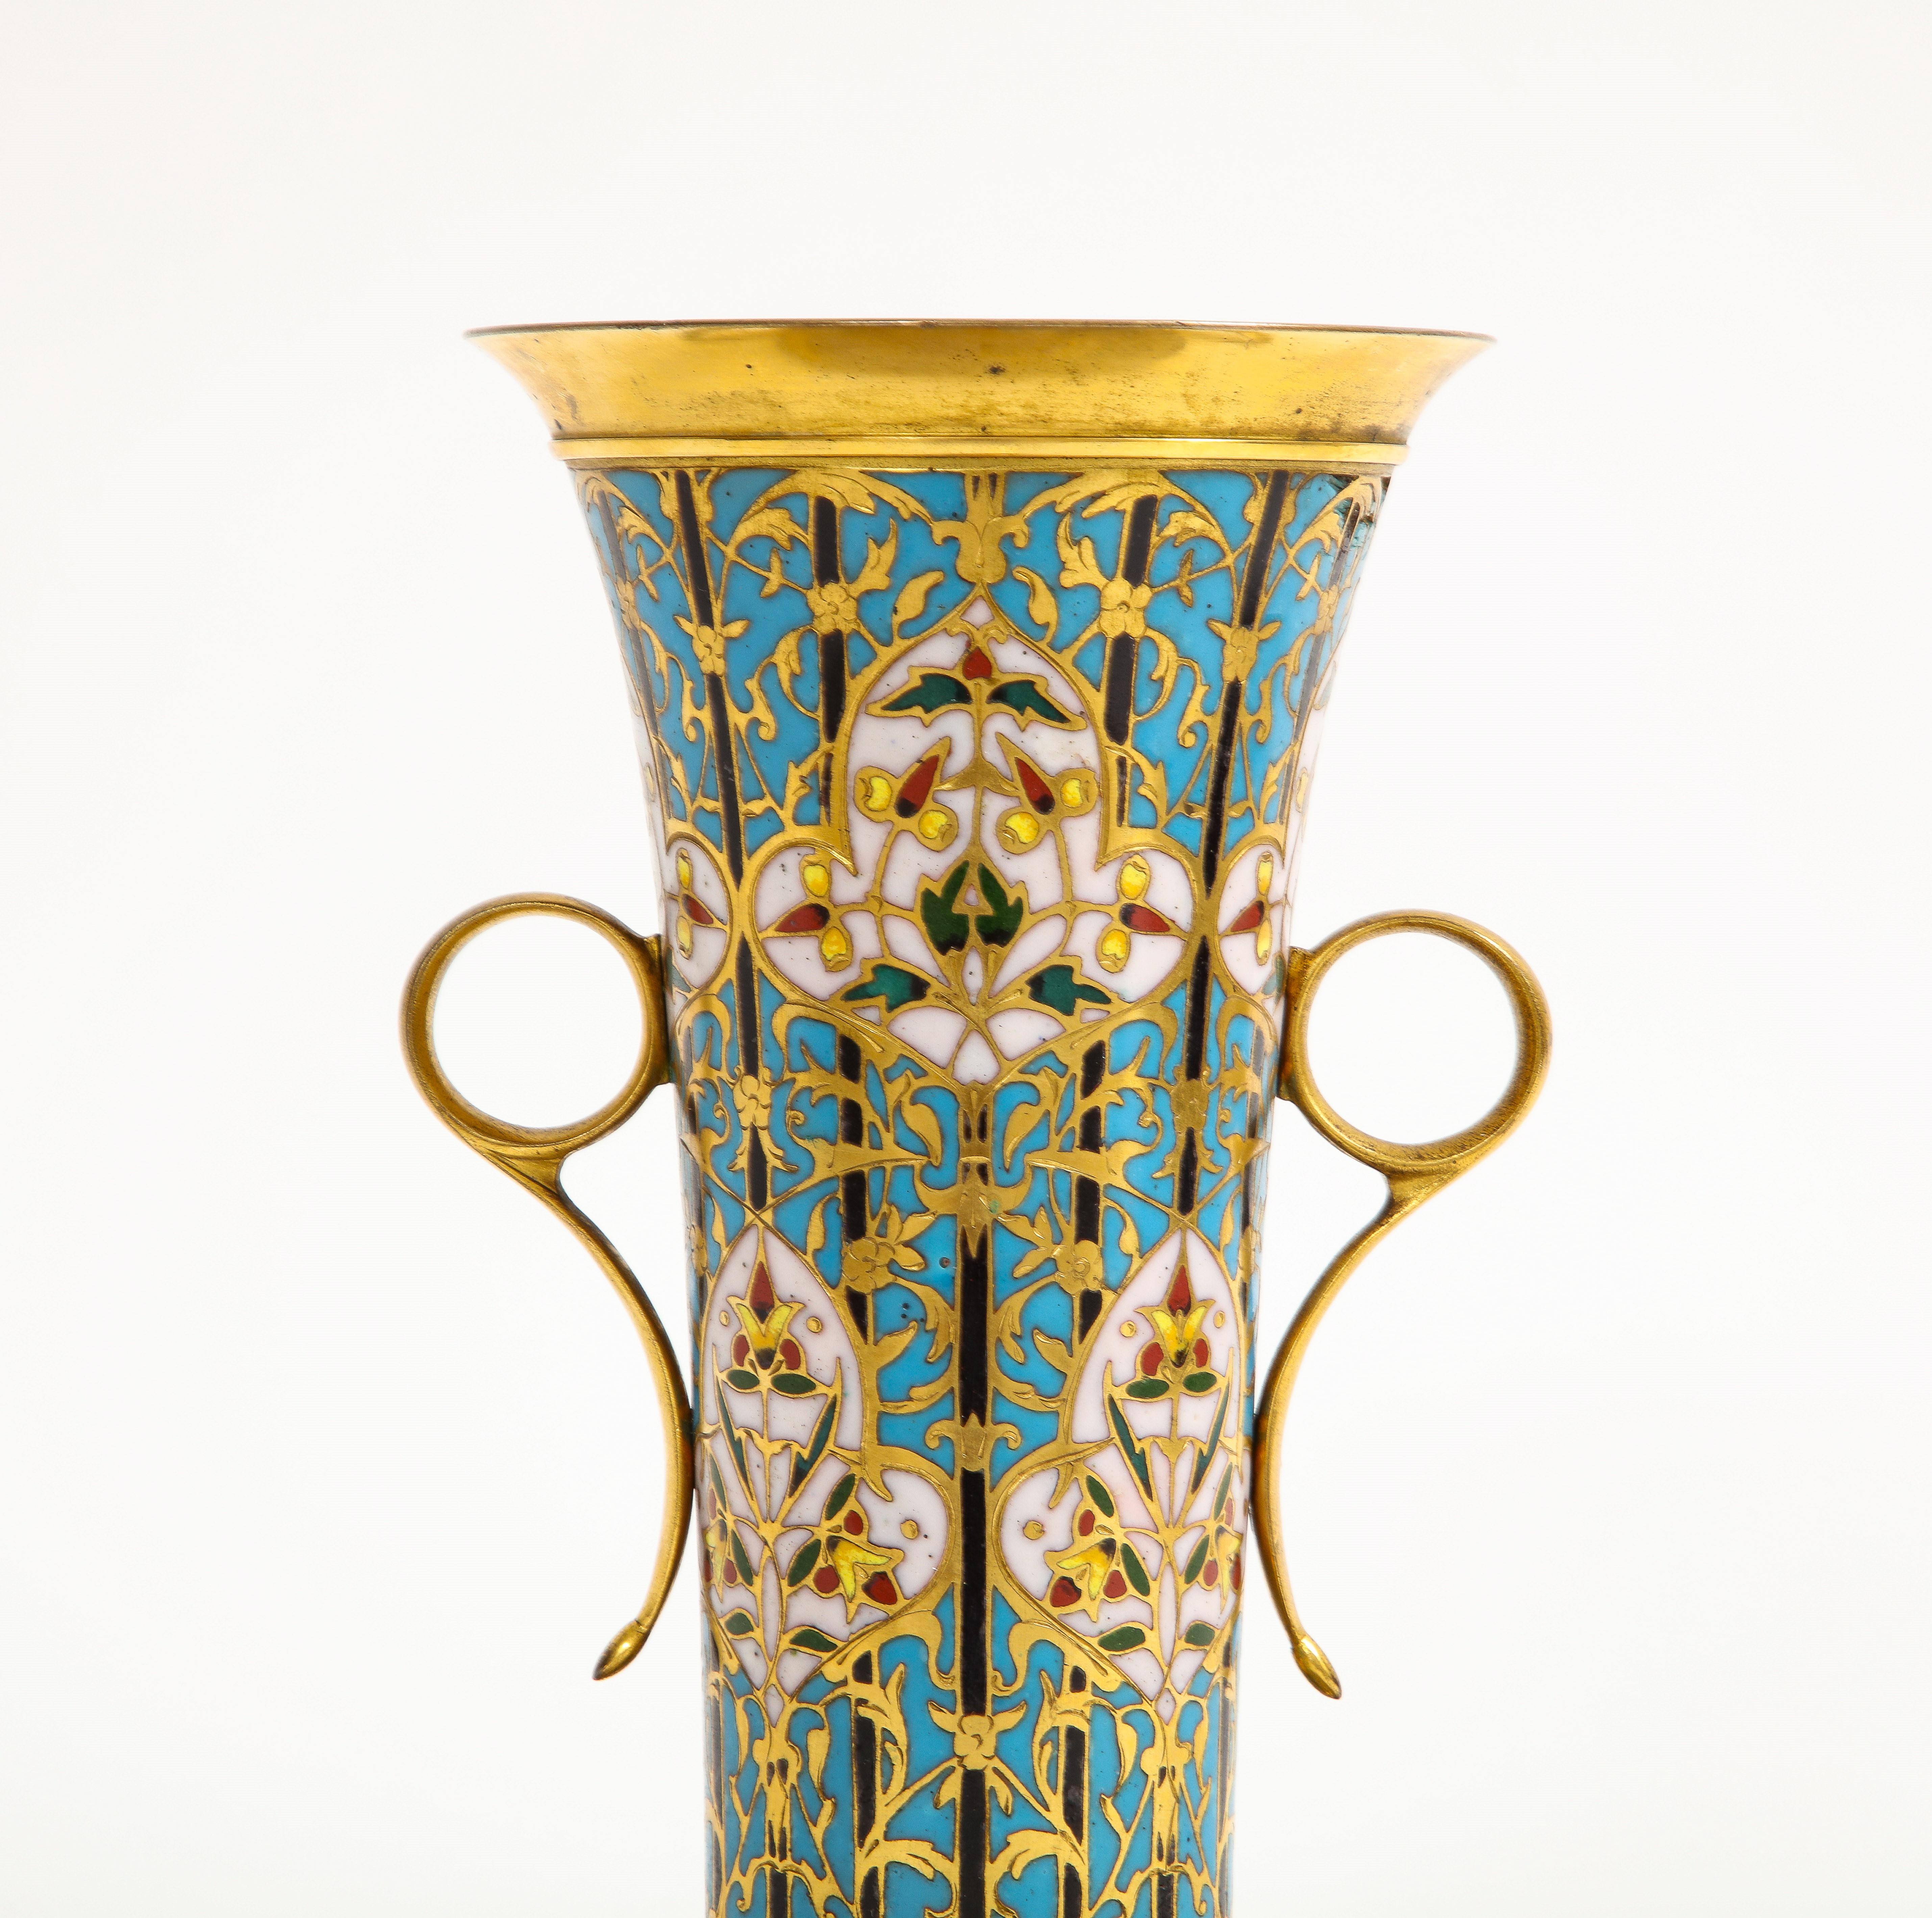 islamic vase